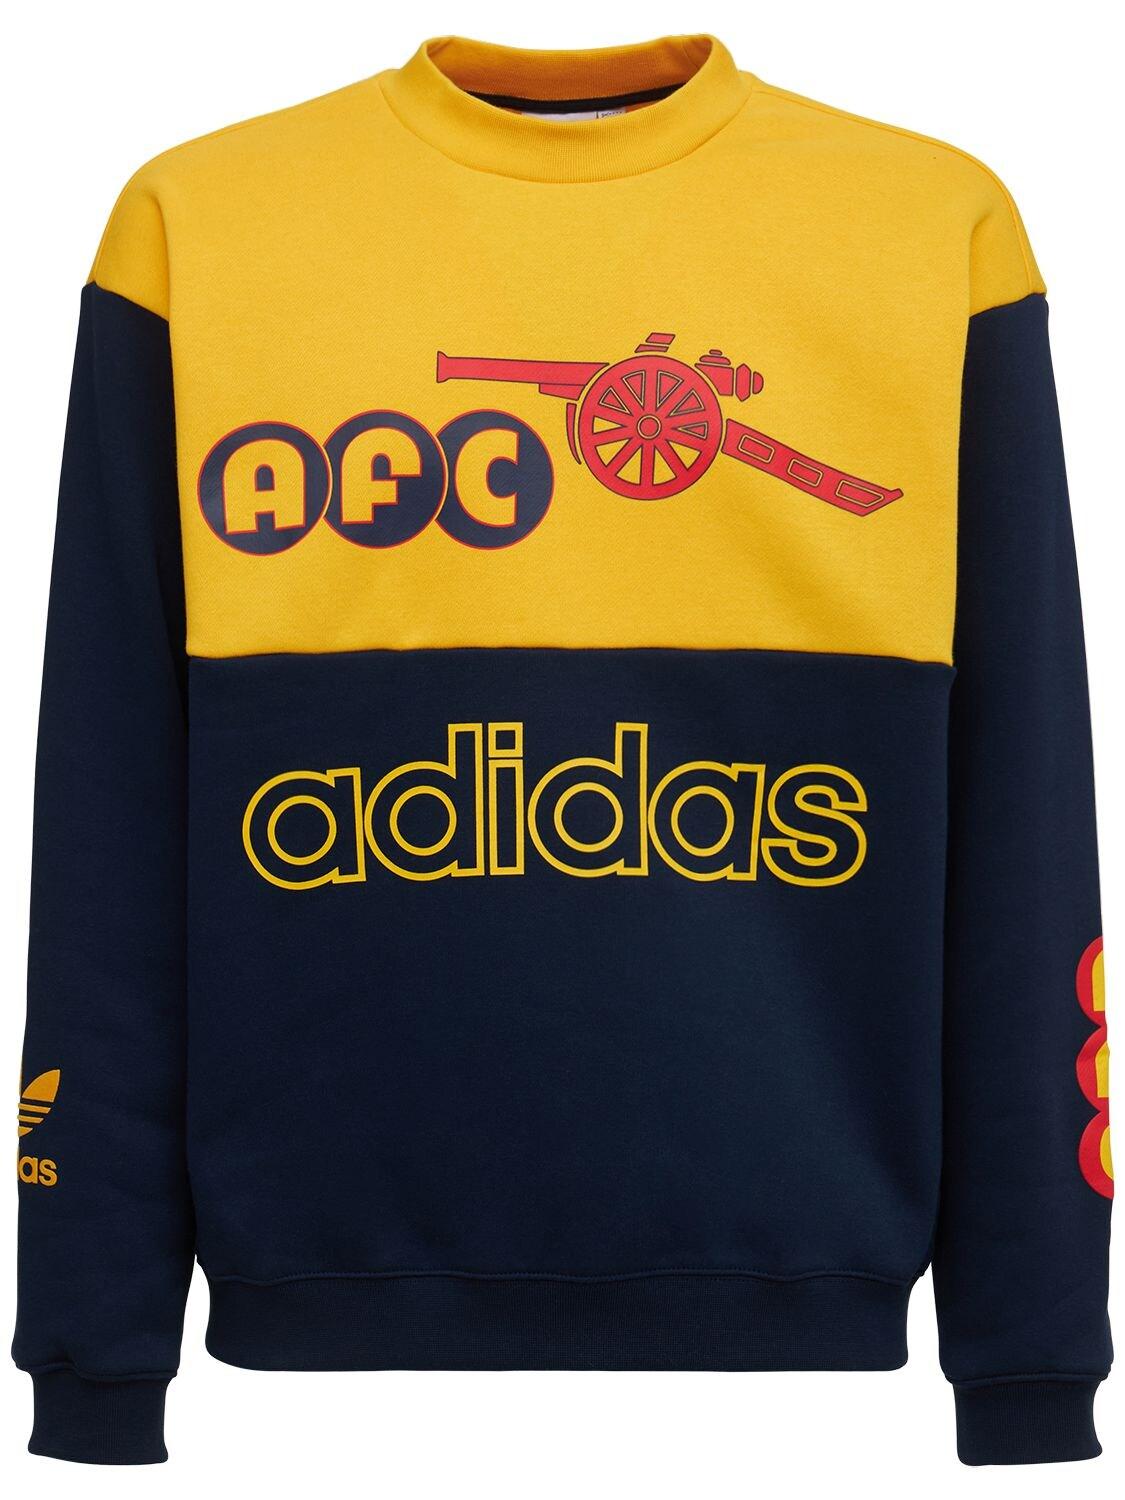 adidas Originals Arsenal Graphic Crew Sweatshirt in Blue for Men